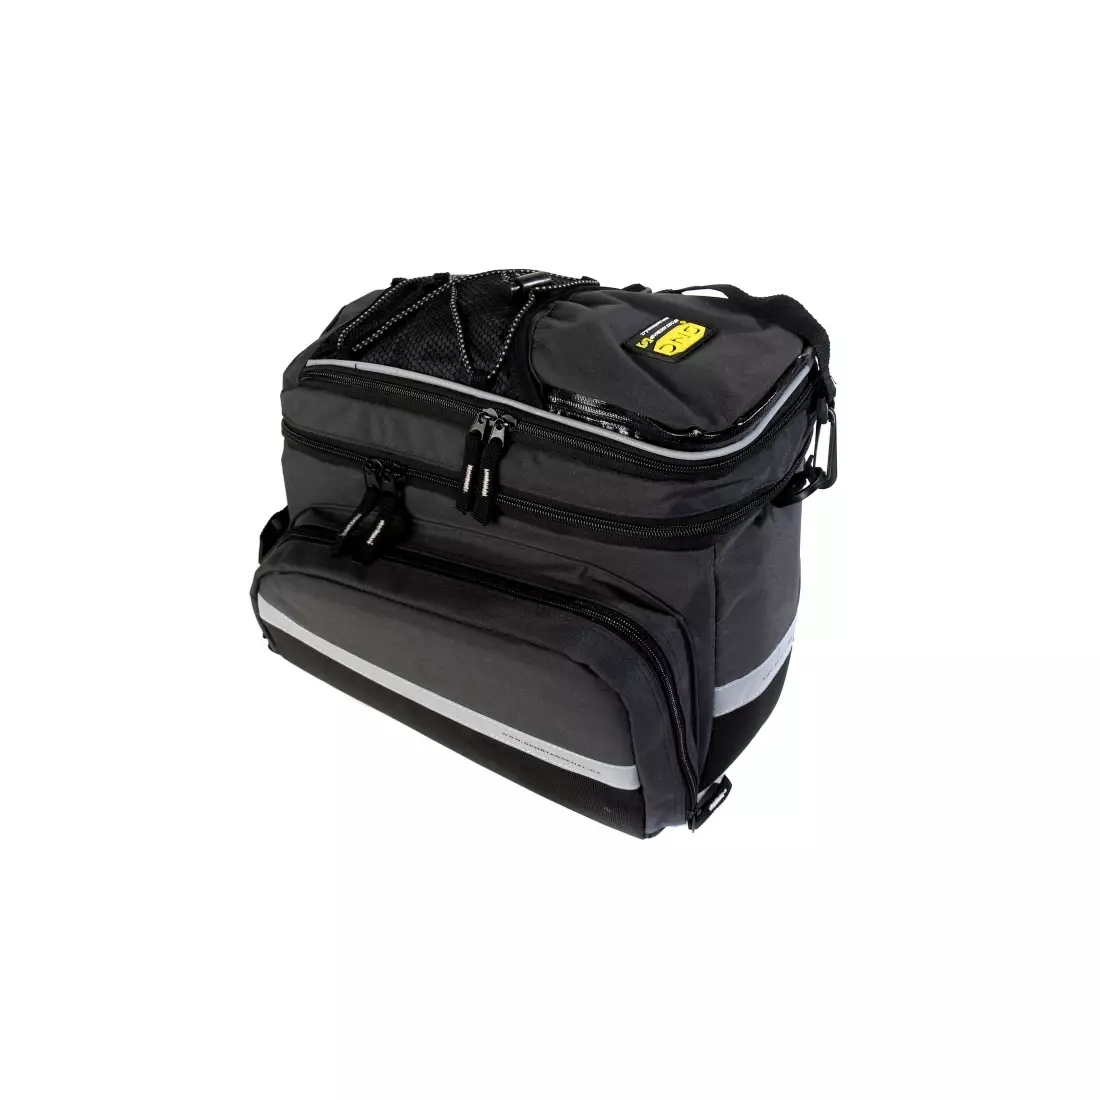 SPORT ARSENAL SNC 550 Sacoara multifunctionala pentru portbagaj